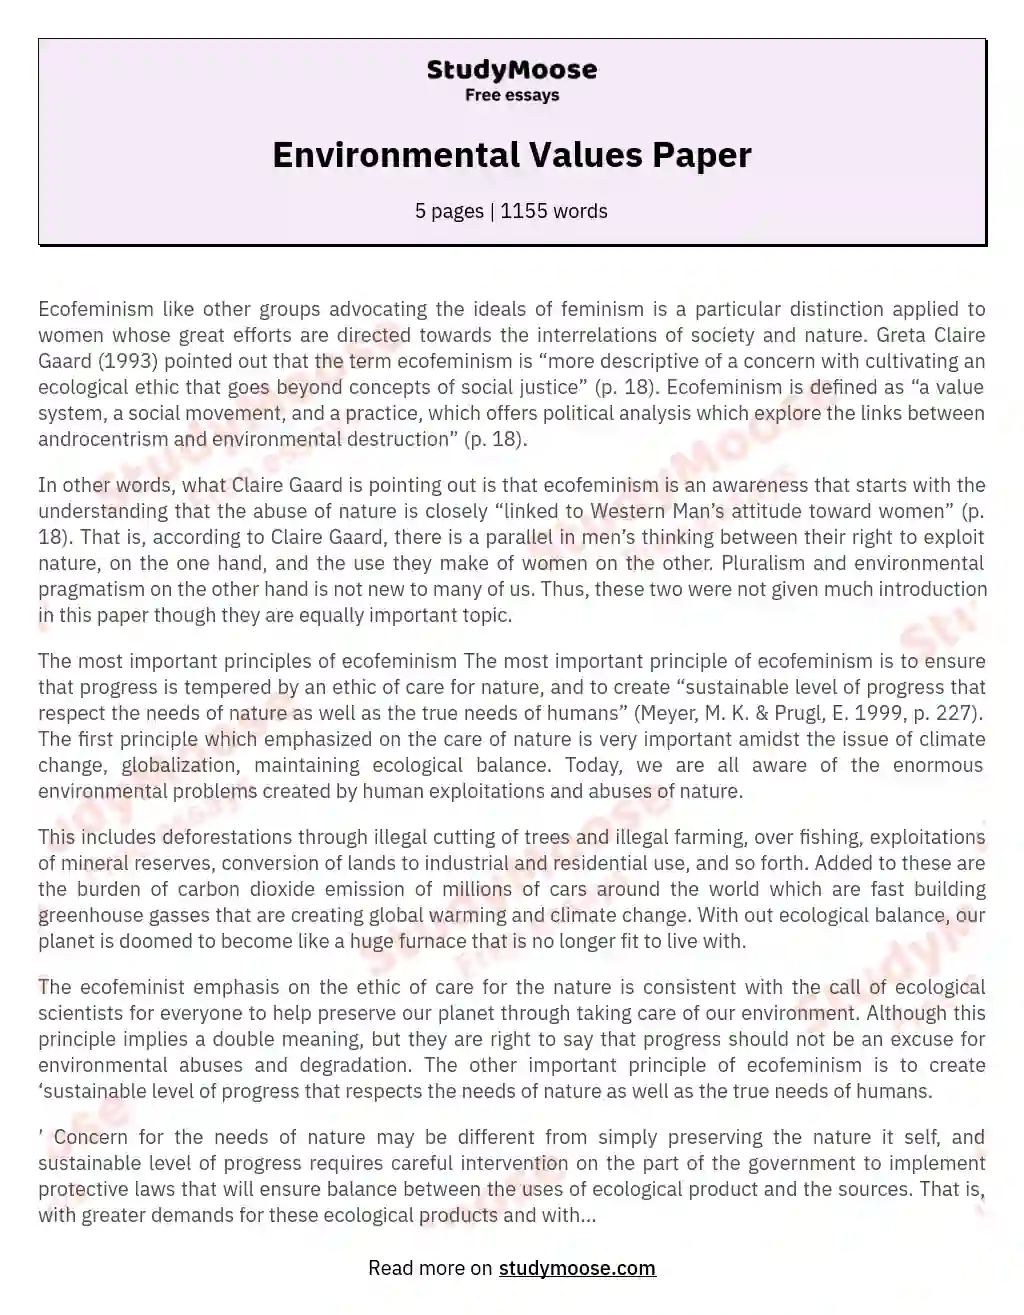 Environmental Values Paper essay